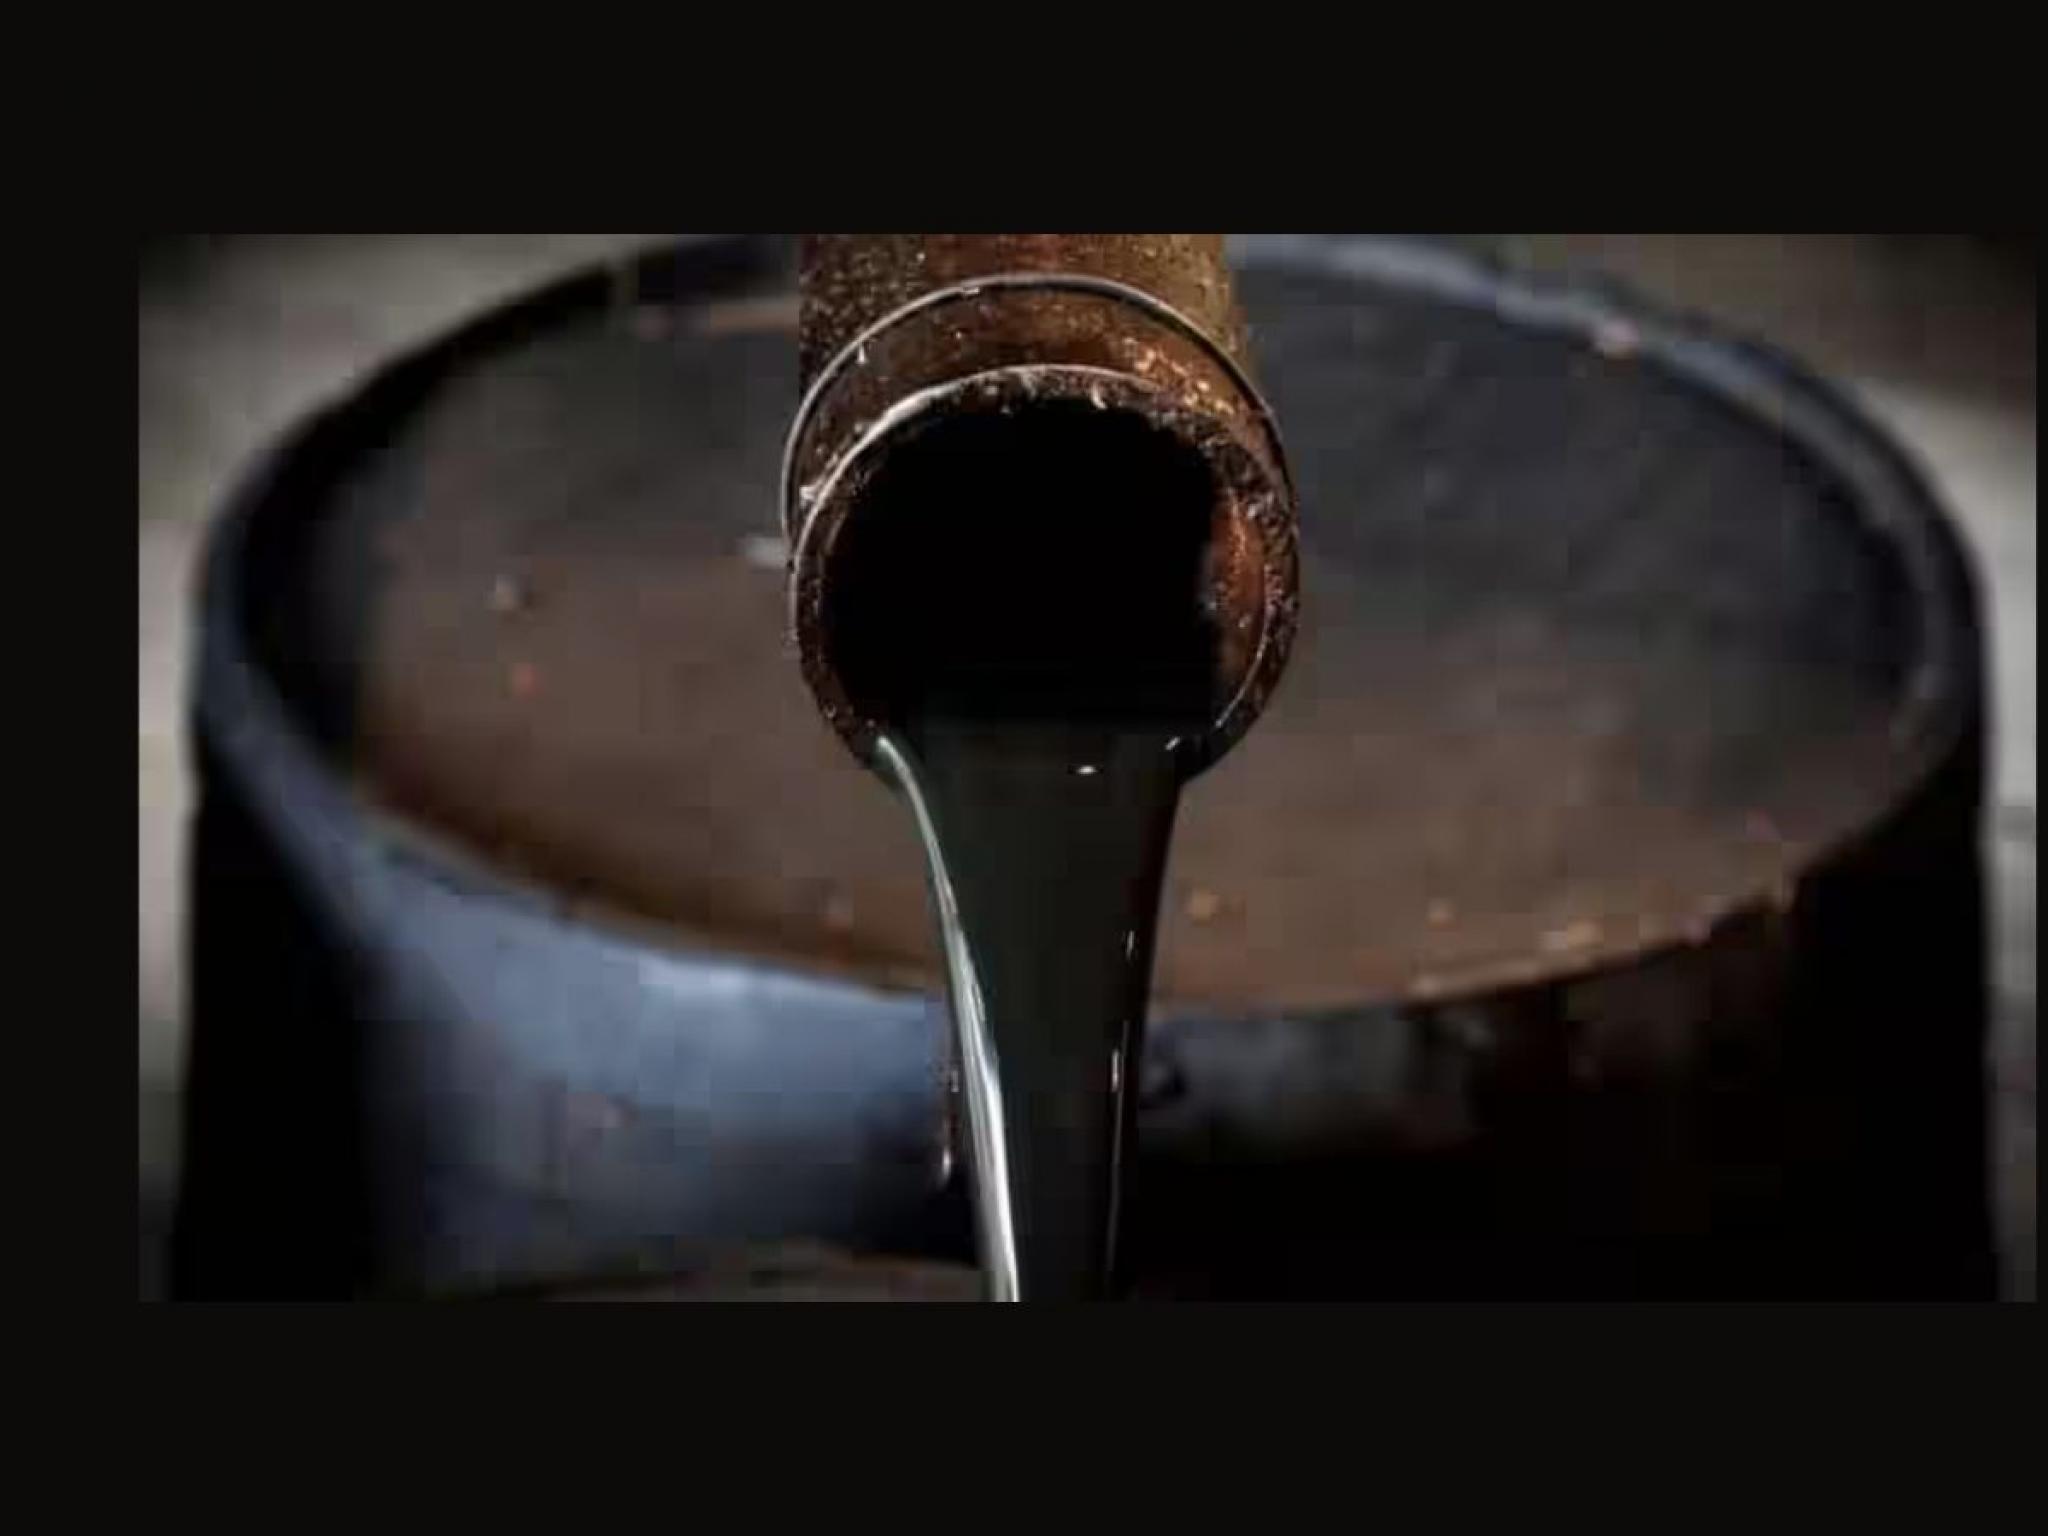  crude-oil-down-4-pharvaris-shares-spike-higher 